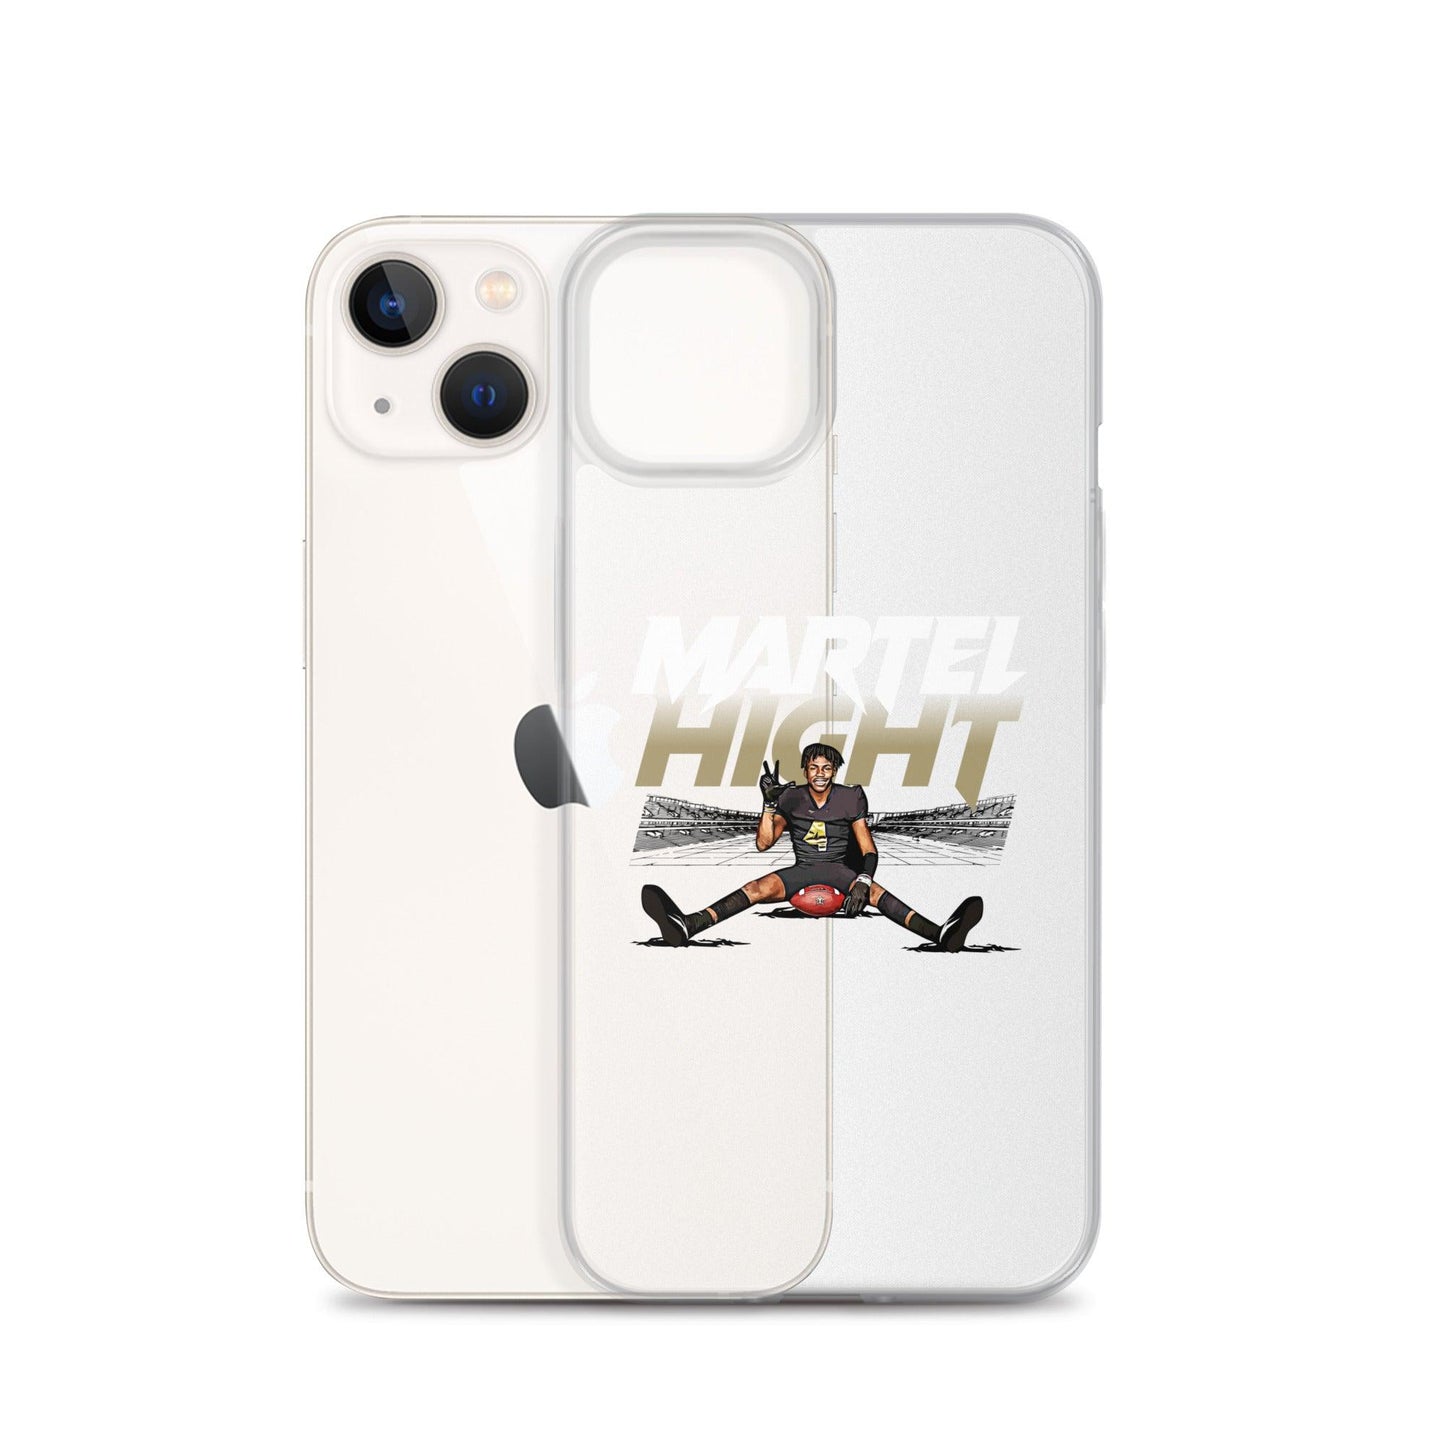 Martel Hight "Gameday" iPhone Case - Fan Arch